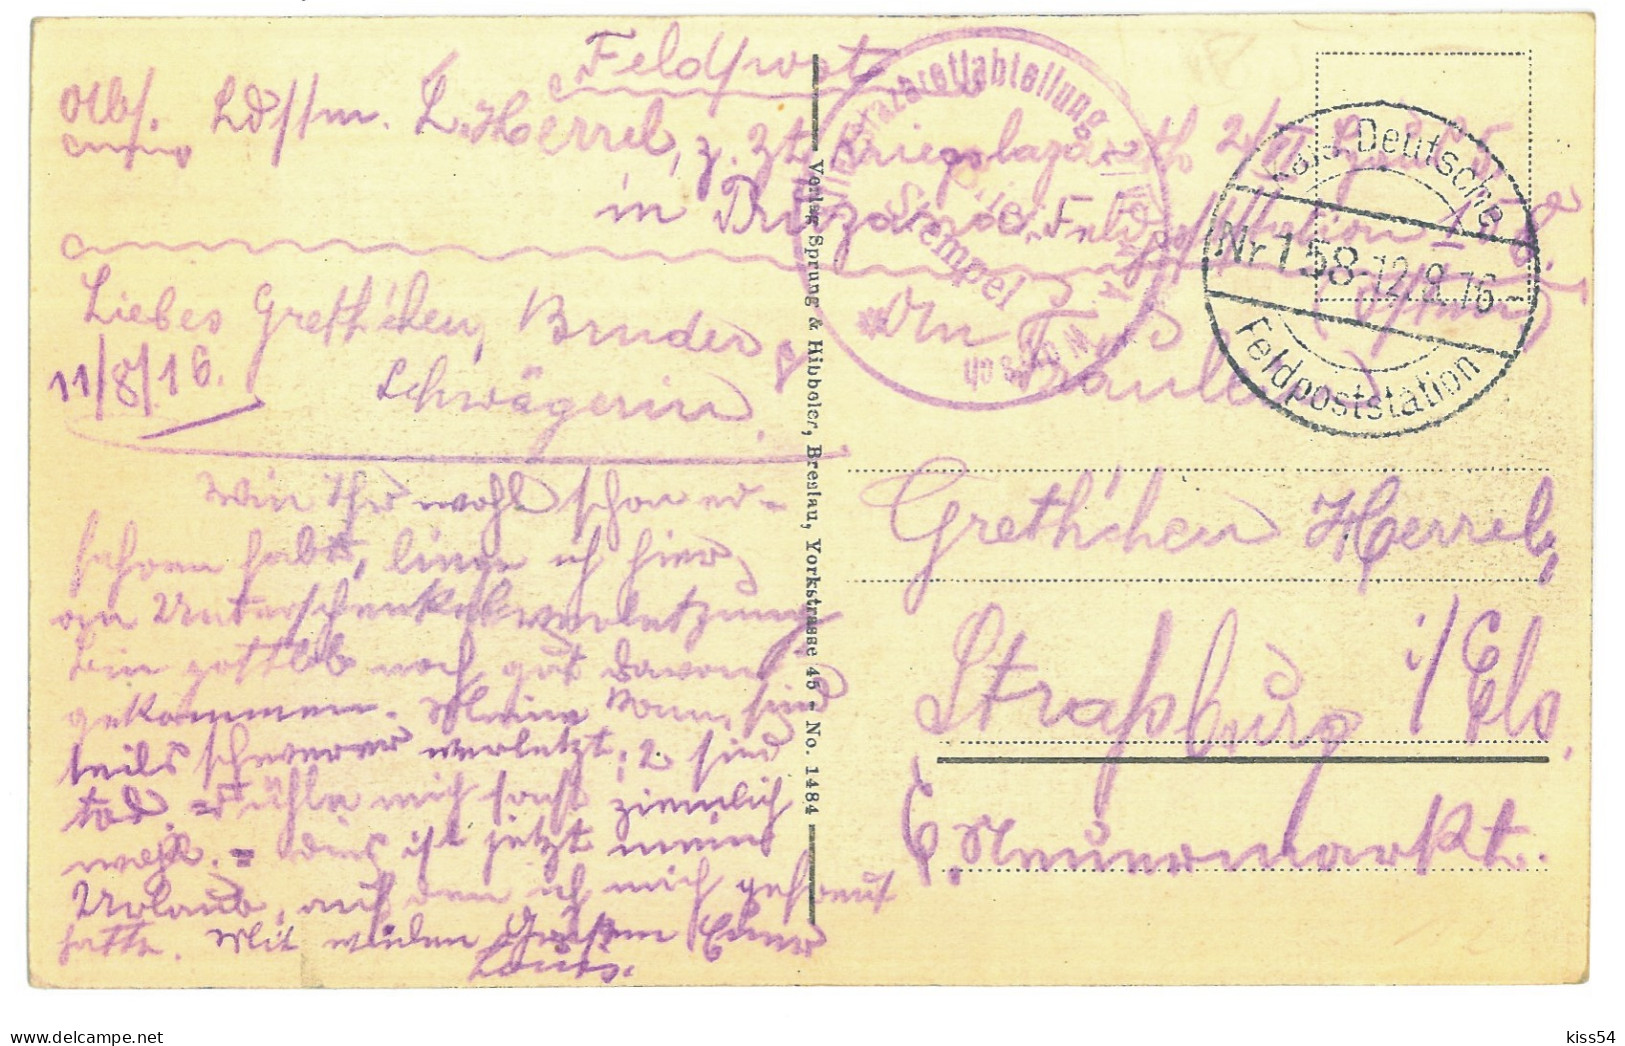 BL 32 - 23264 PRUZANA, School Street, Belarus - Old Postcard, CENSOR - Used - 1916 - Belarus